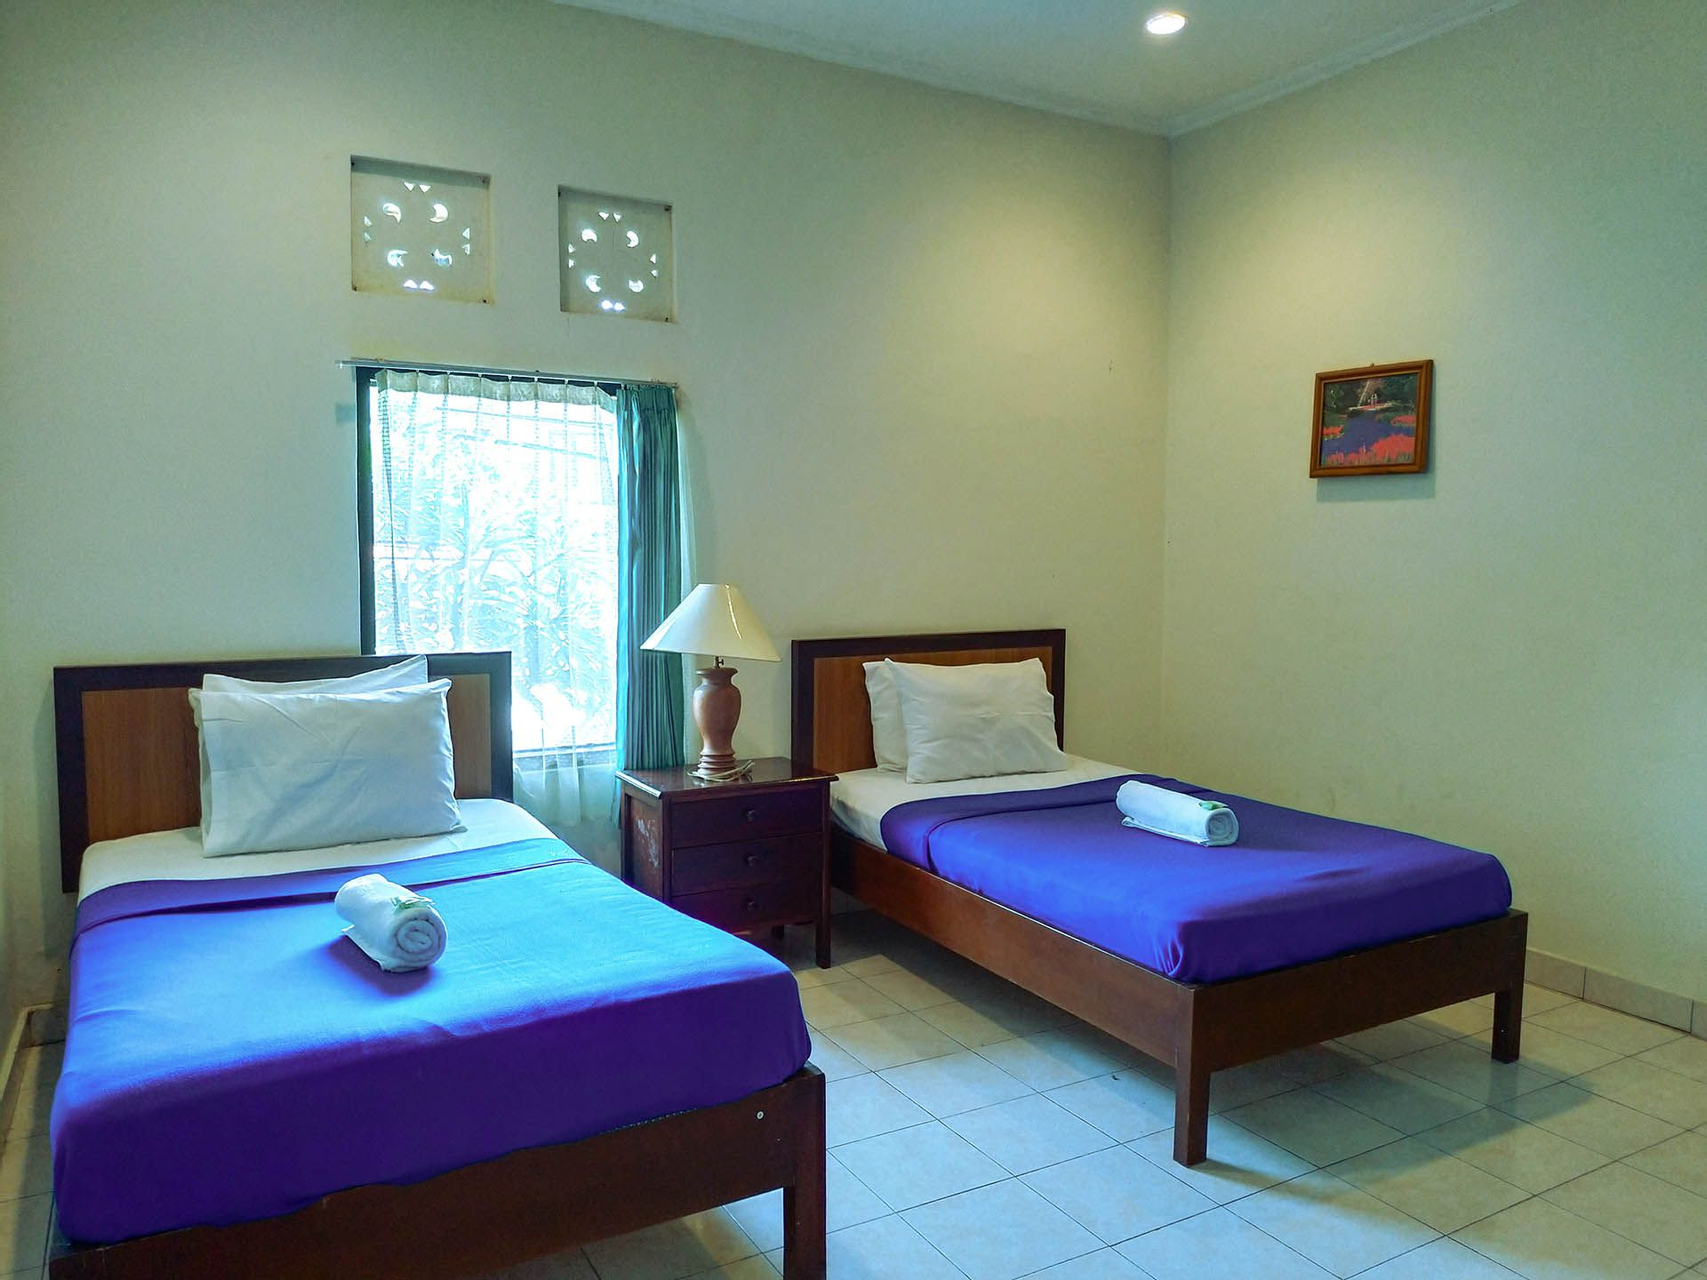 Bedroom 1, Catur Adi Putra Hotel, Denpasar